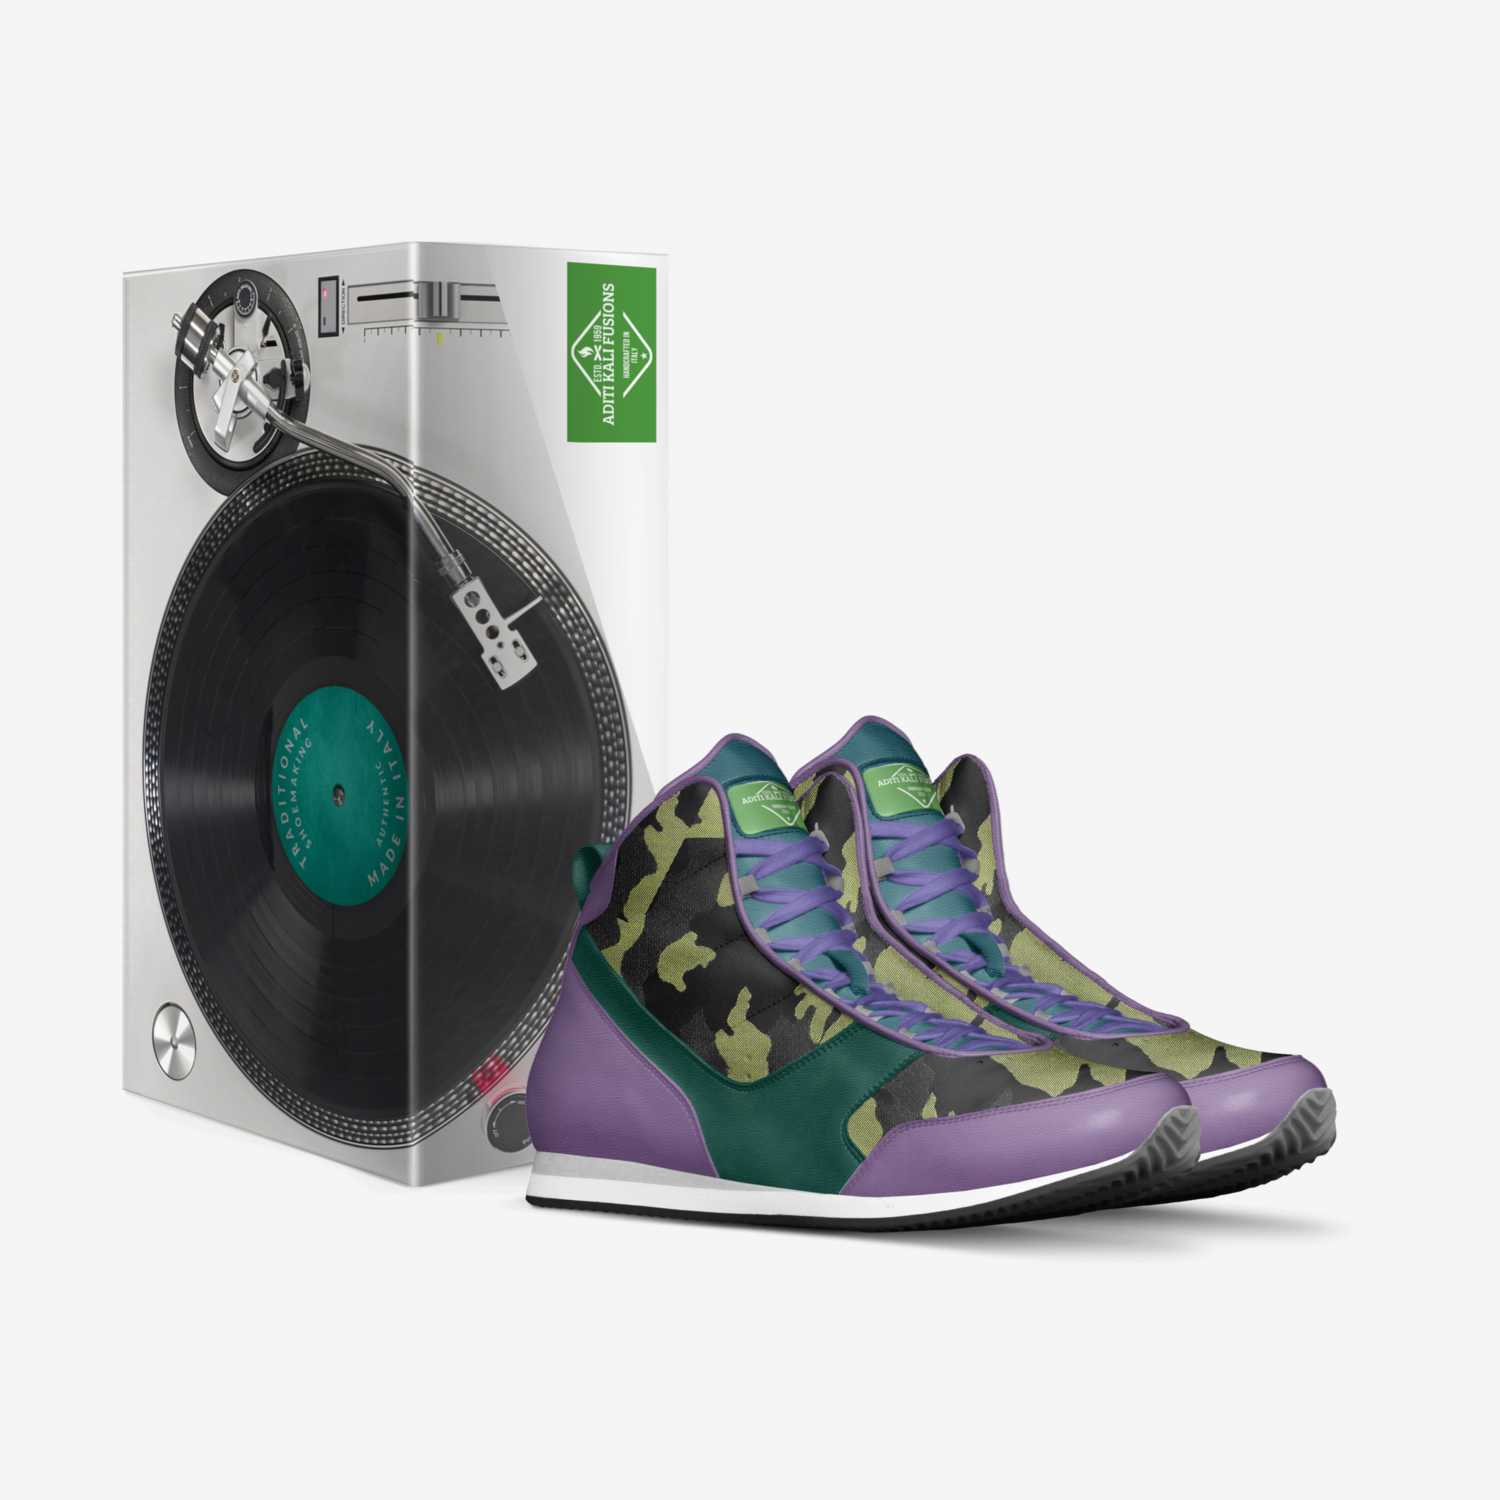 aditi kali fusions custom made in Italy shoes by Aditi-kali Of Wonkey Donkey Bazaar | Box view